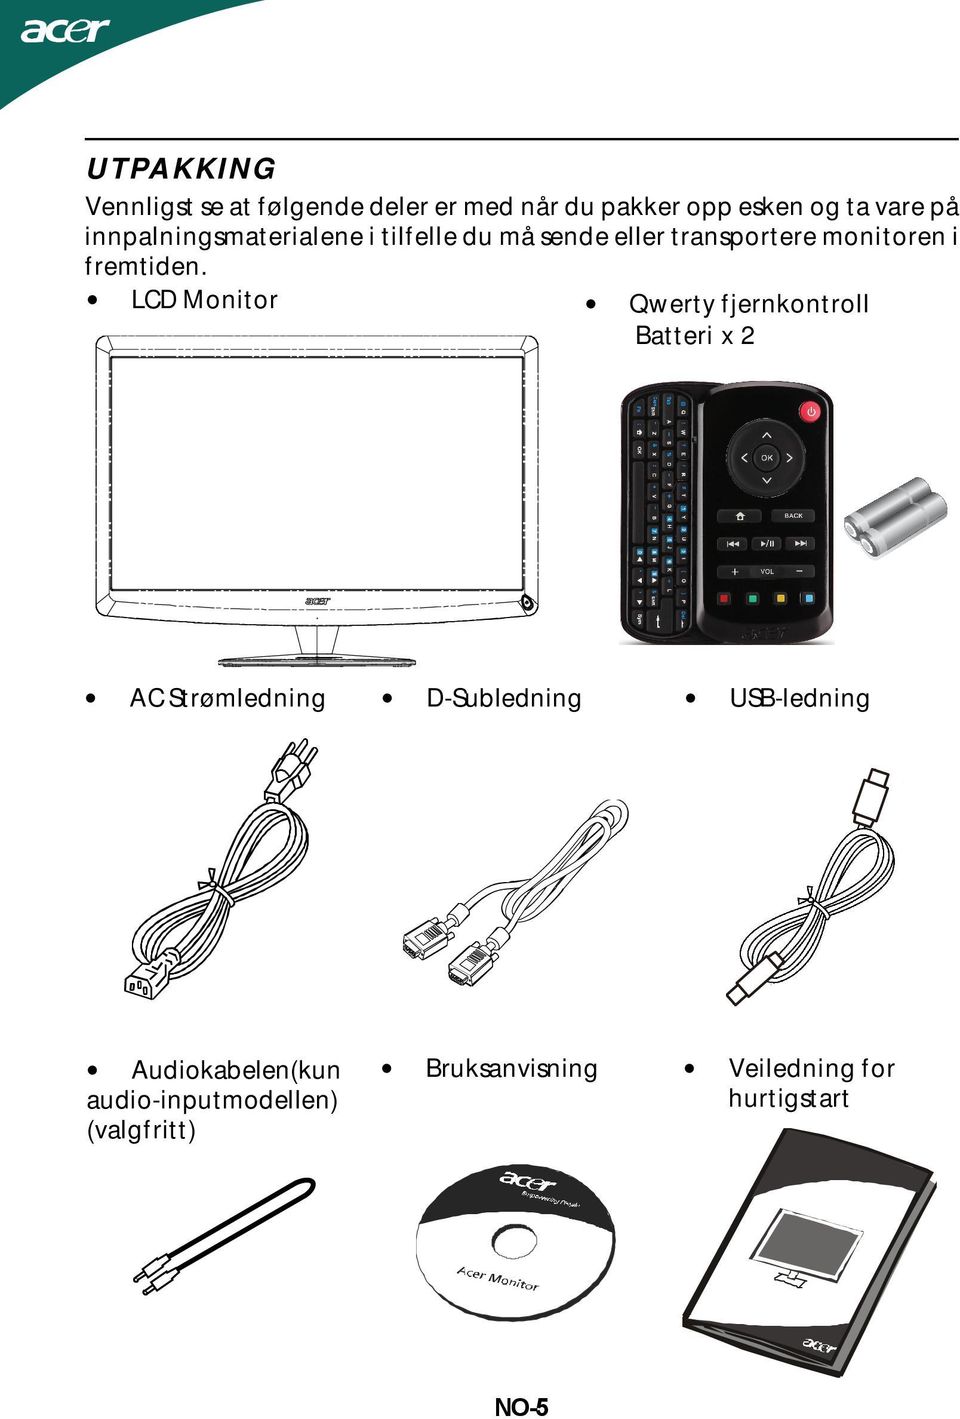 LCD Monitor Qwerty fjernkontroll Batteri x 2 AC Strømledning D-Subledning USB-ledning